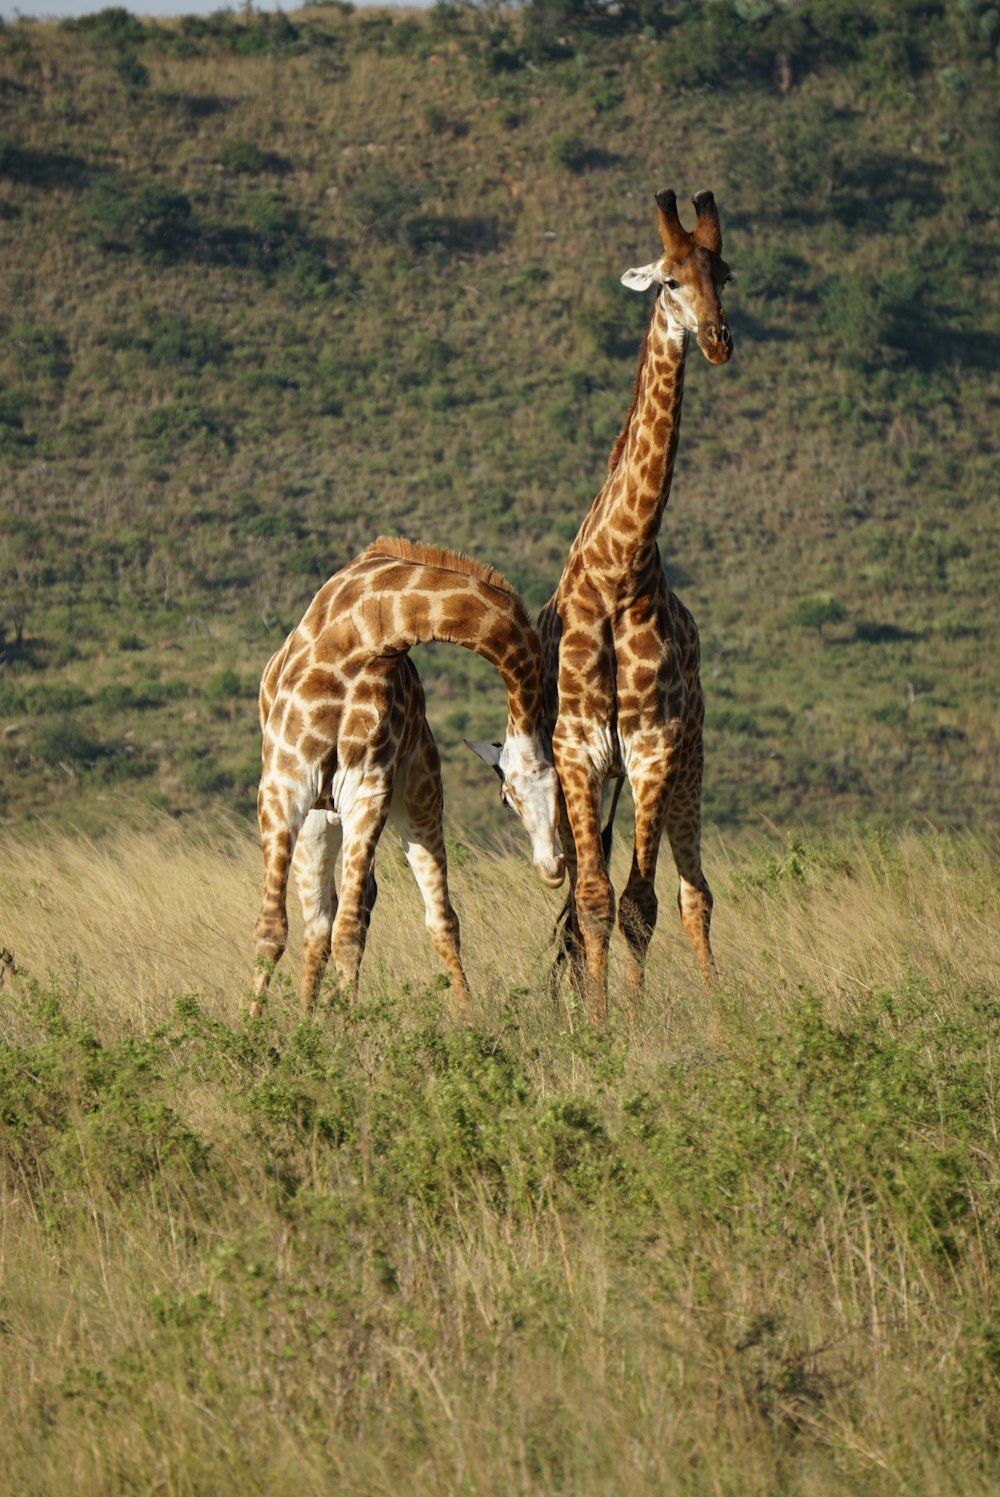 two giraffe on grass field during daytime